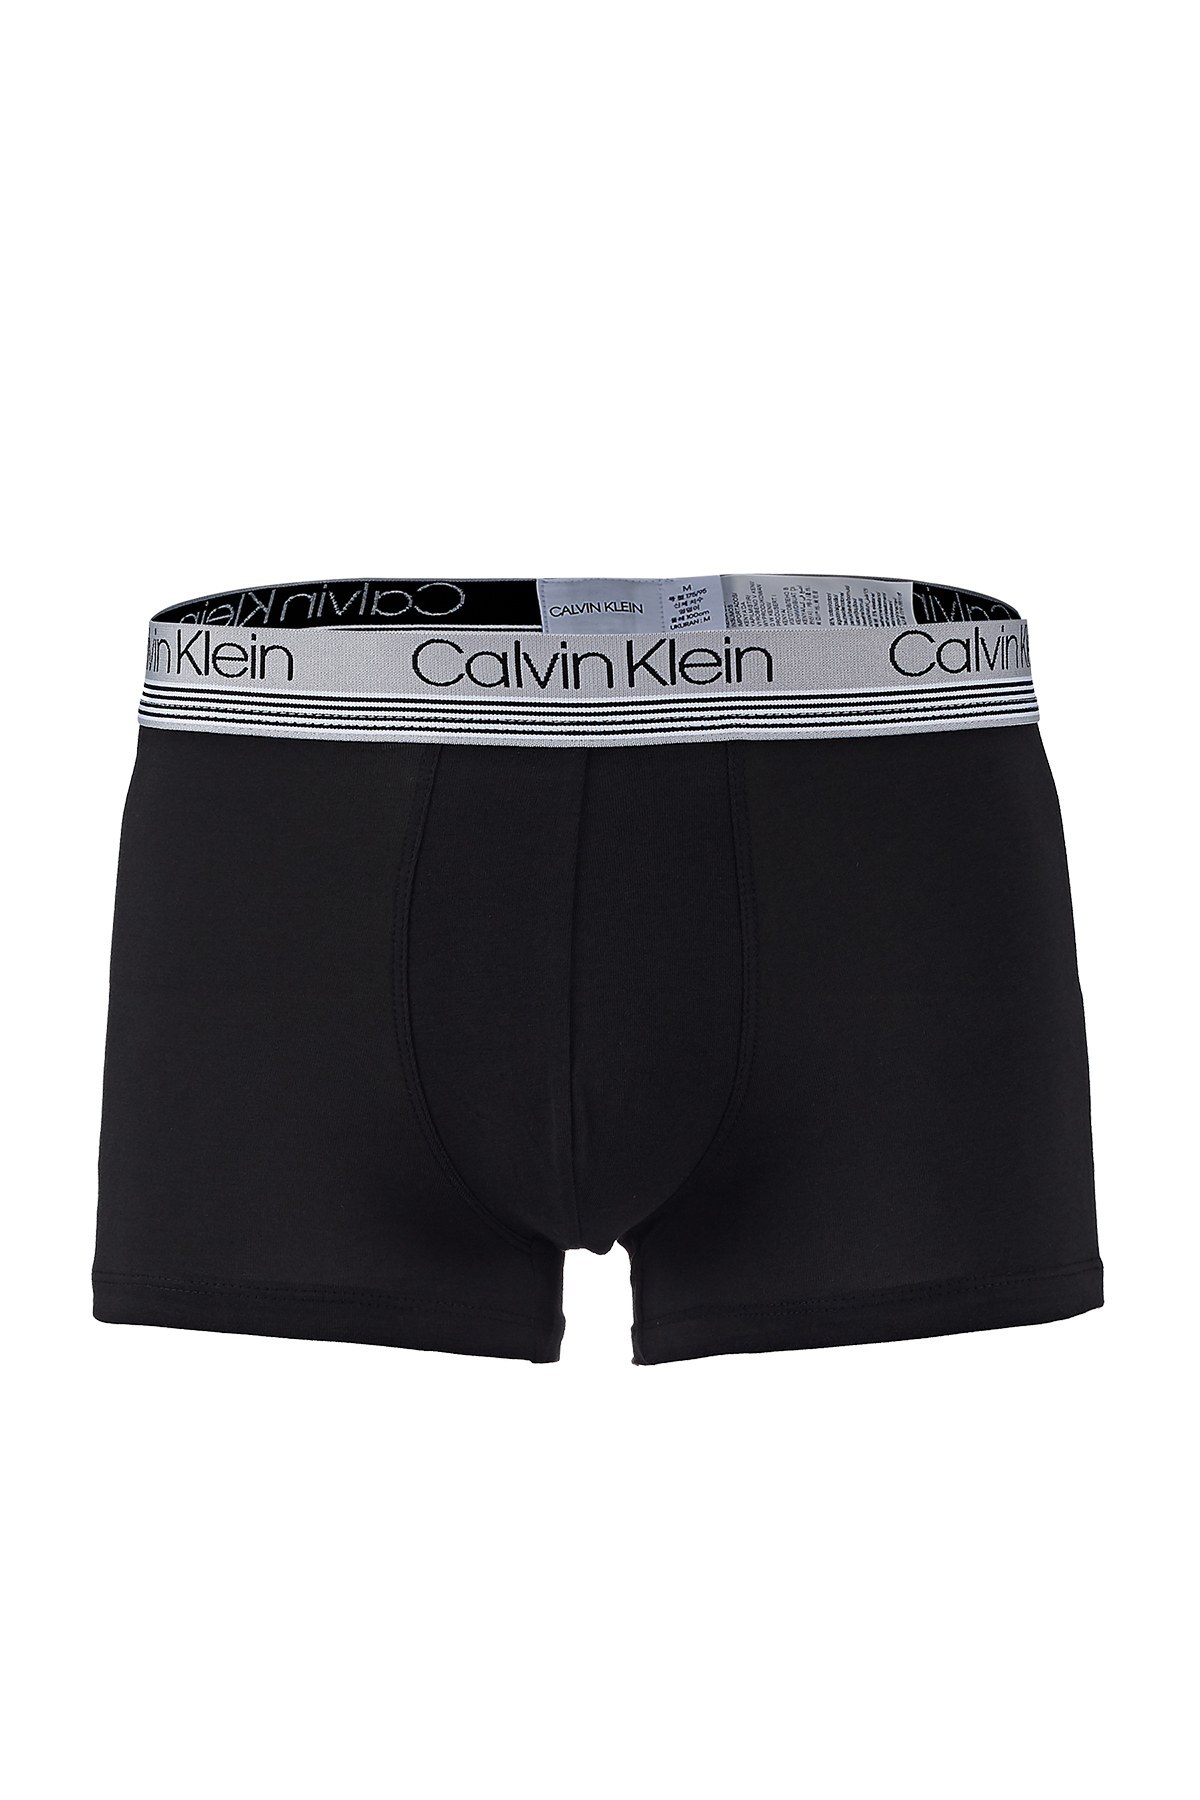 Calvin Klein 3 Pack Erkek Boxer 000NB2336A T6B SİYAH-GRİ